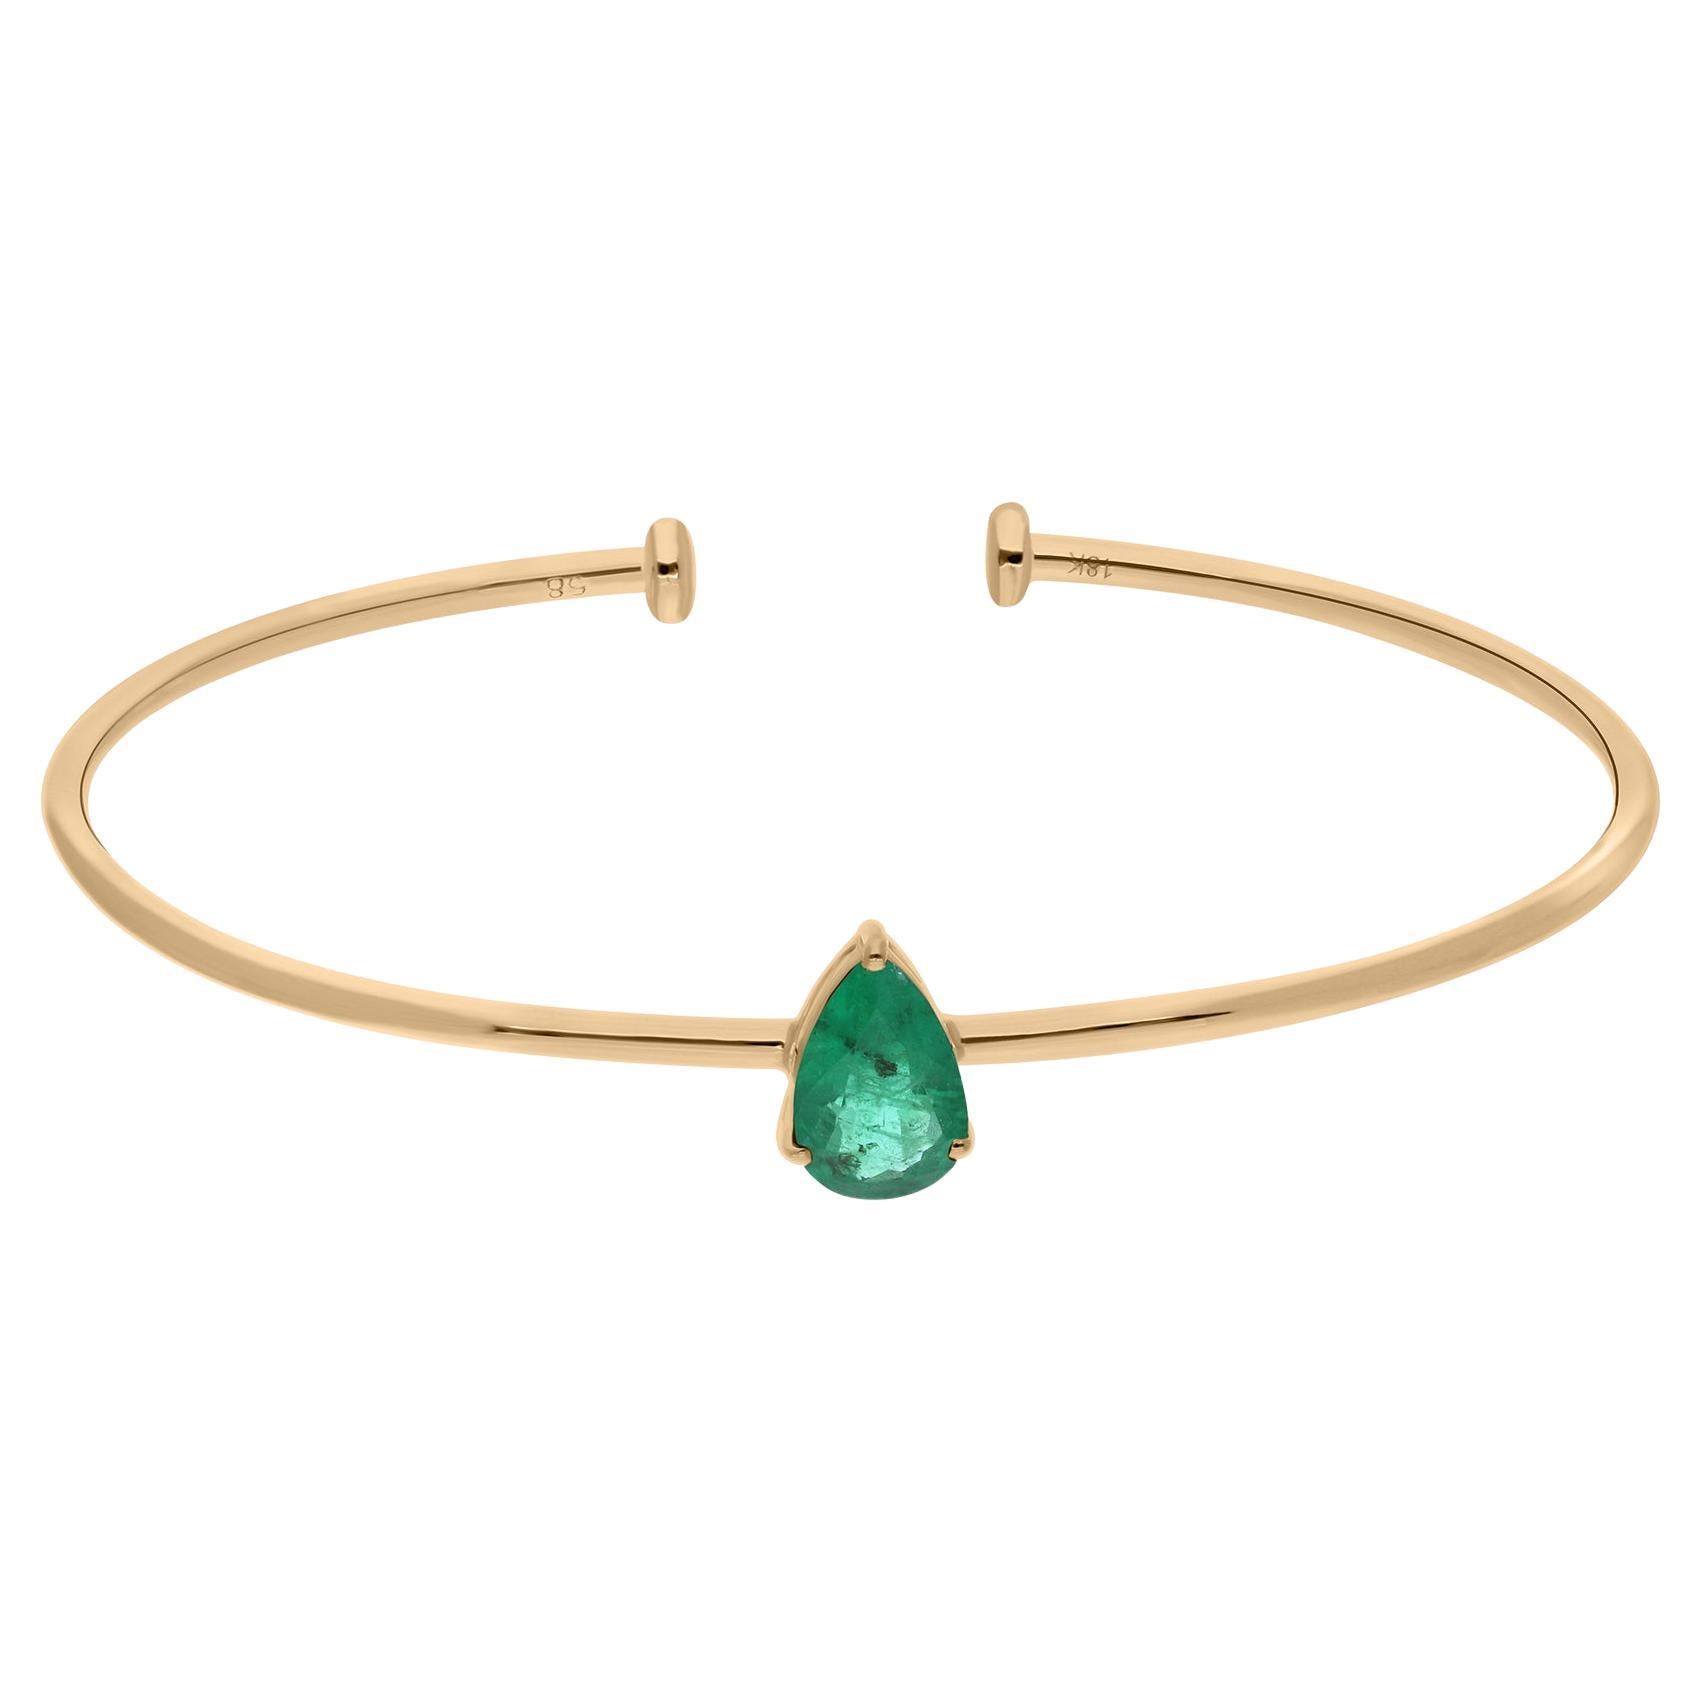 1.13 Carat Pear Zambian Emerald Gemstone Ring 18 Karat Yellow Gold Fine Jewelry For Sale